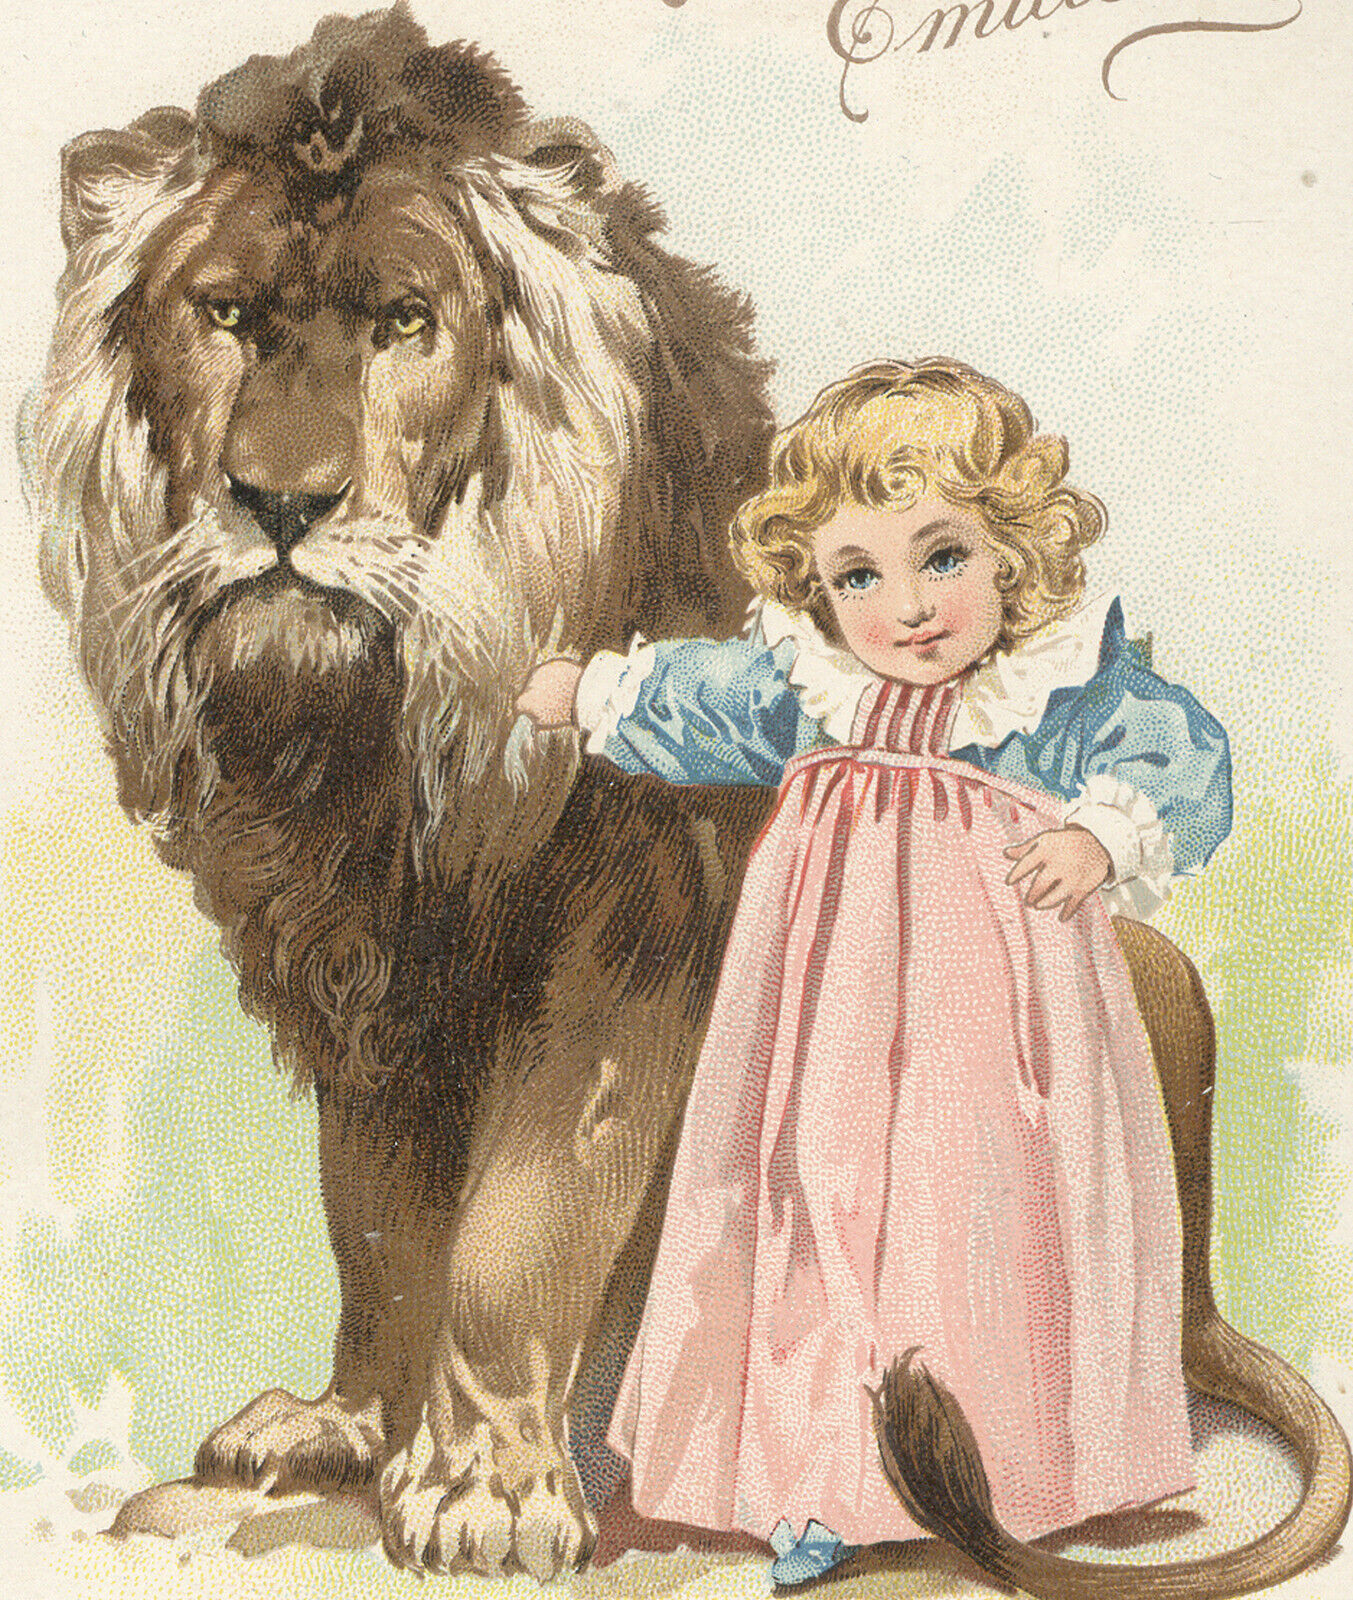 1894 SCOTT\'S EMULATION TRADE CARD, STRENGTH & BEAUTY, SM GIRL & LARGE LION  V883